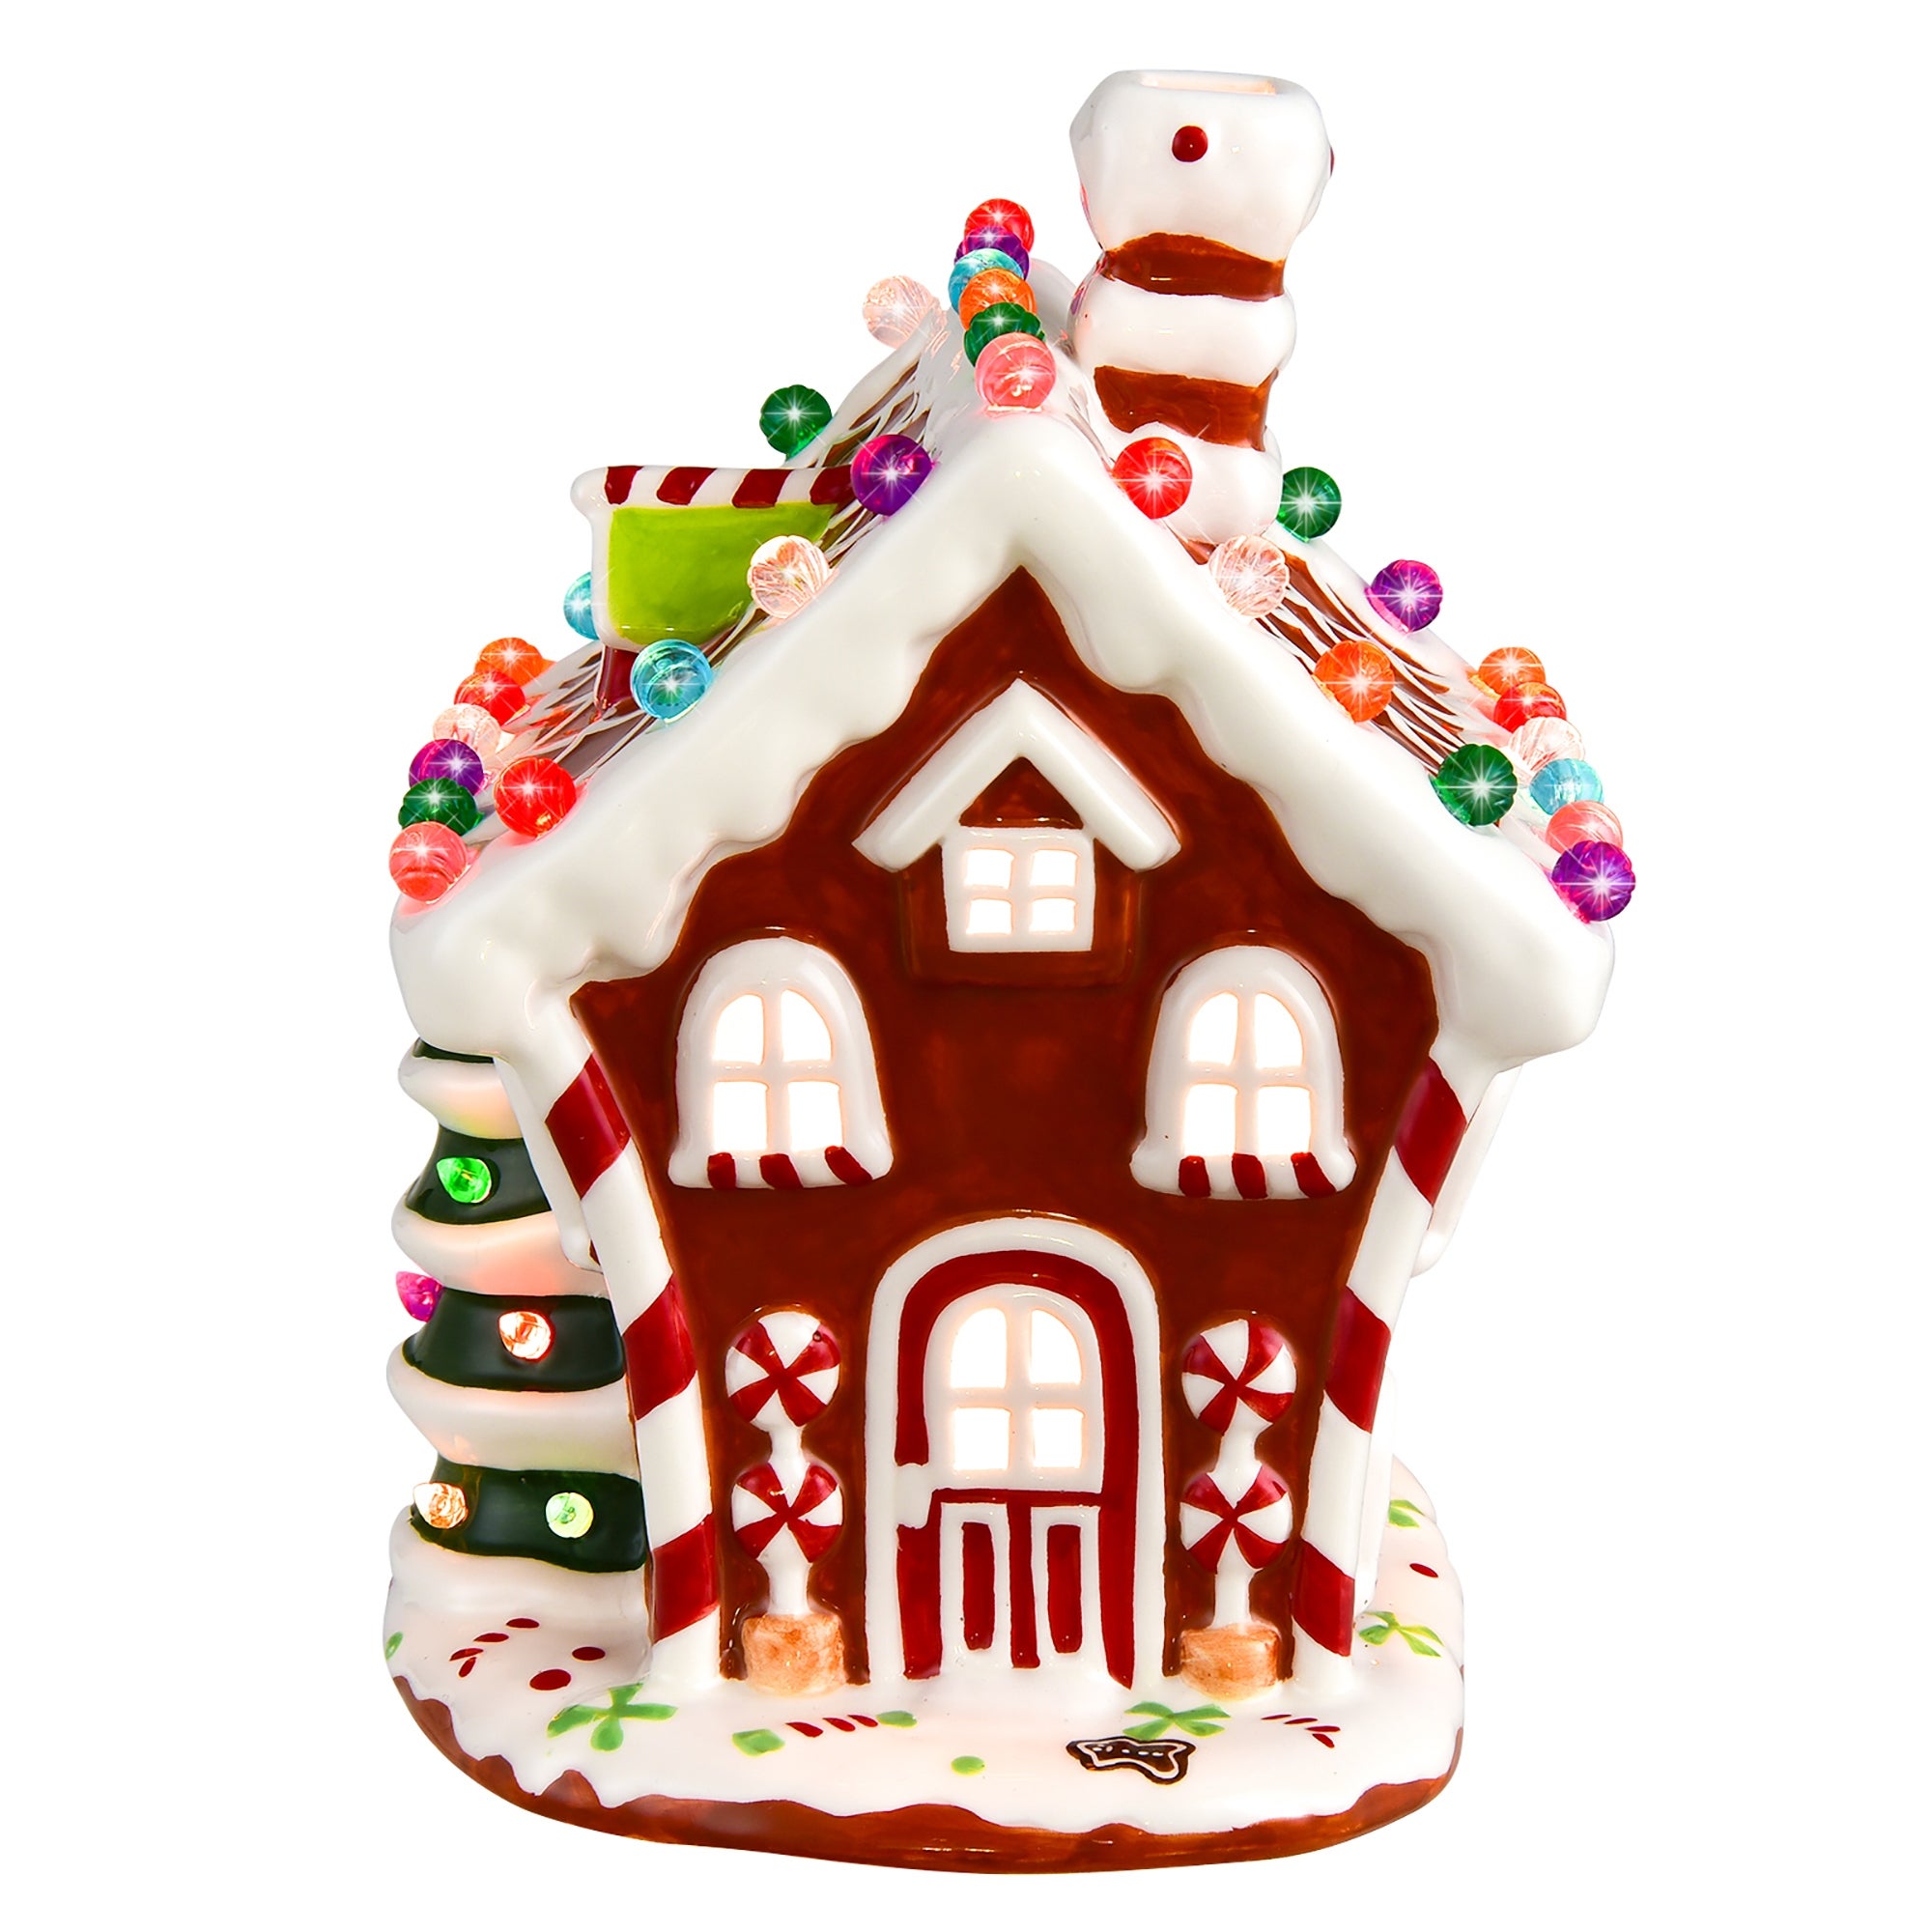 Costway Ceramic Village House Hand Painted Decor Christmas W/ 44 Details